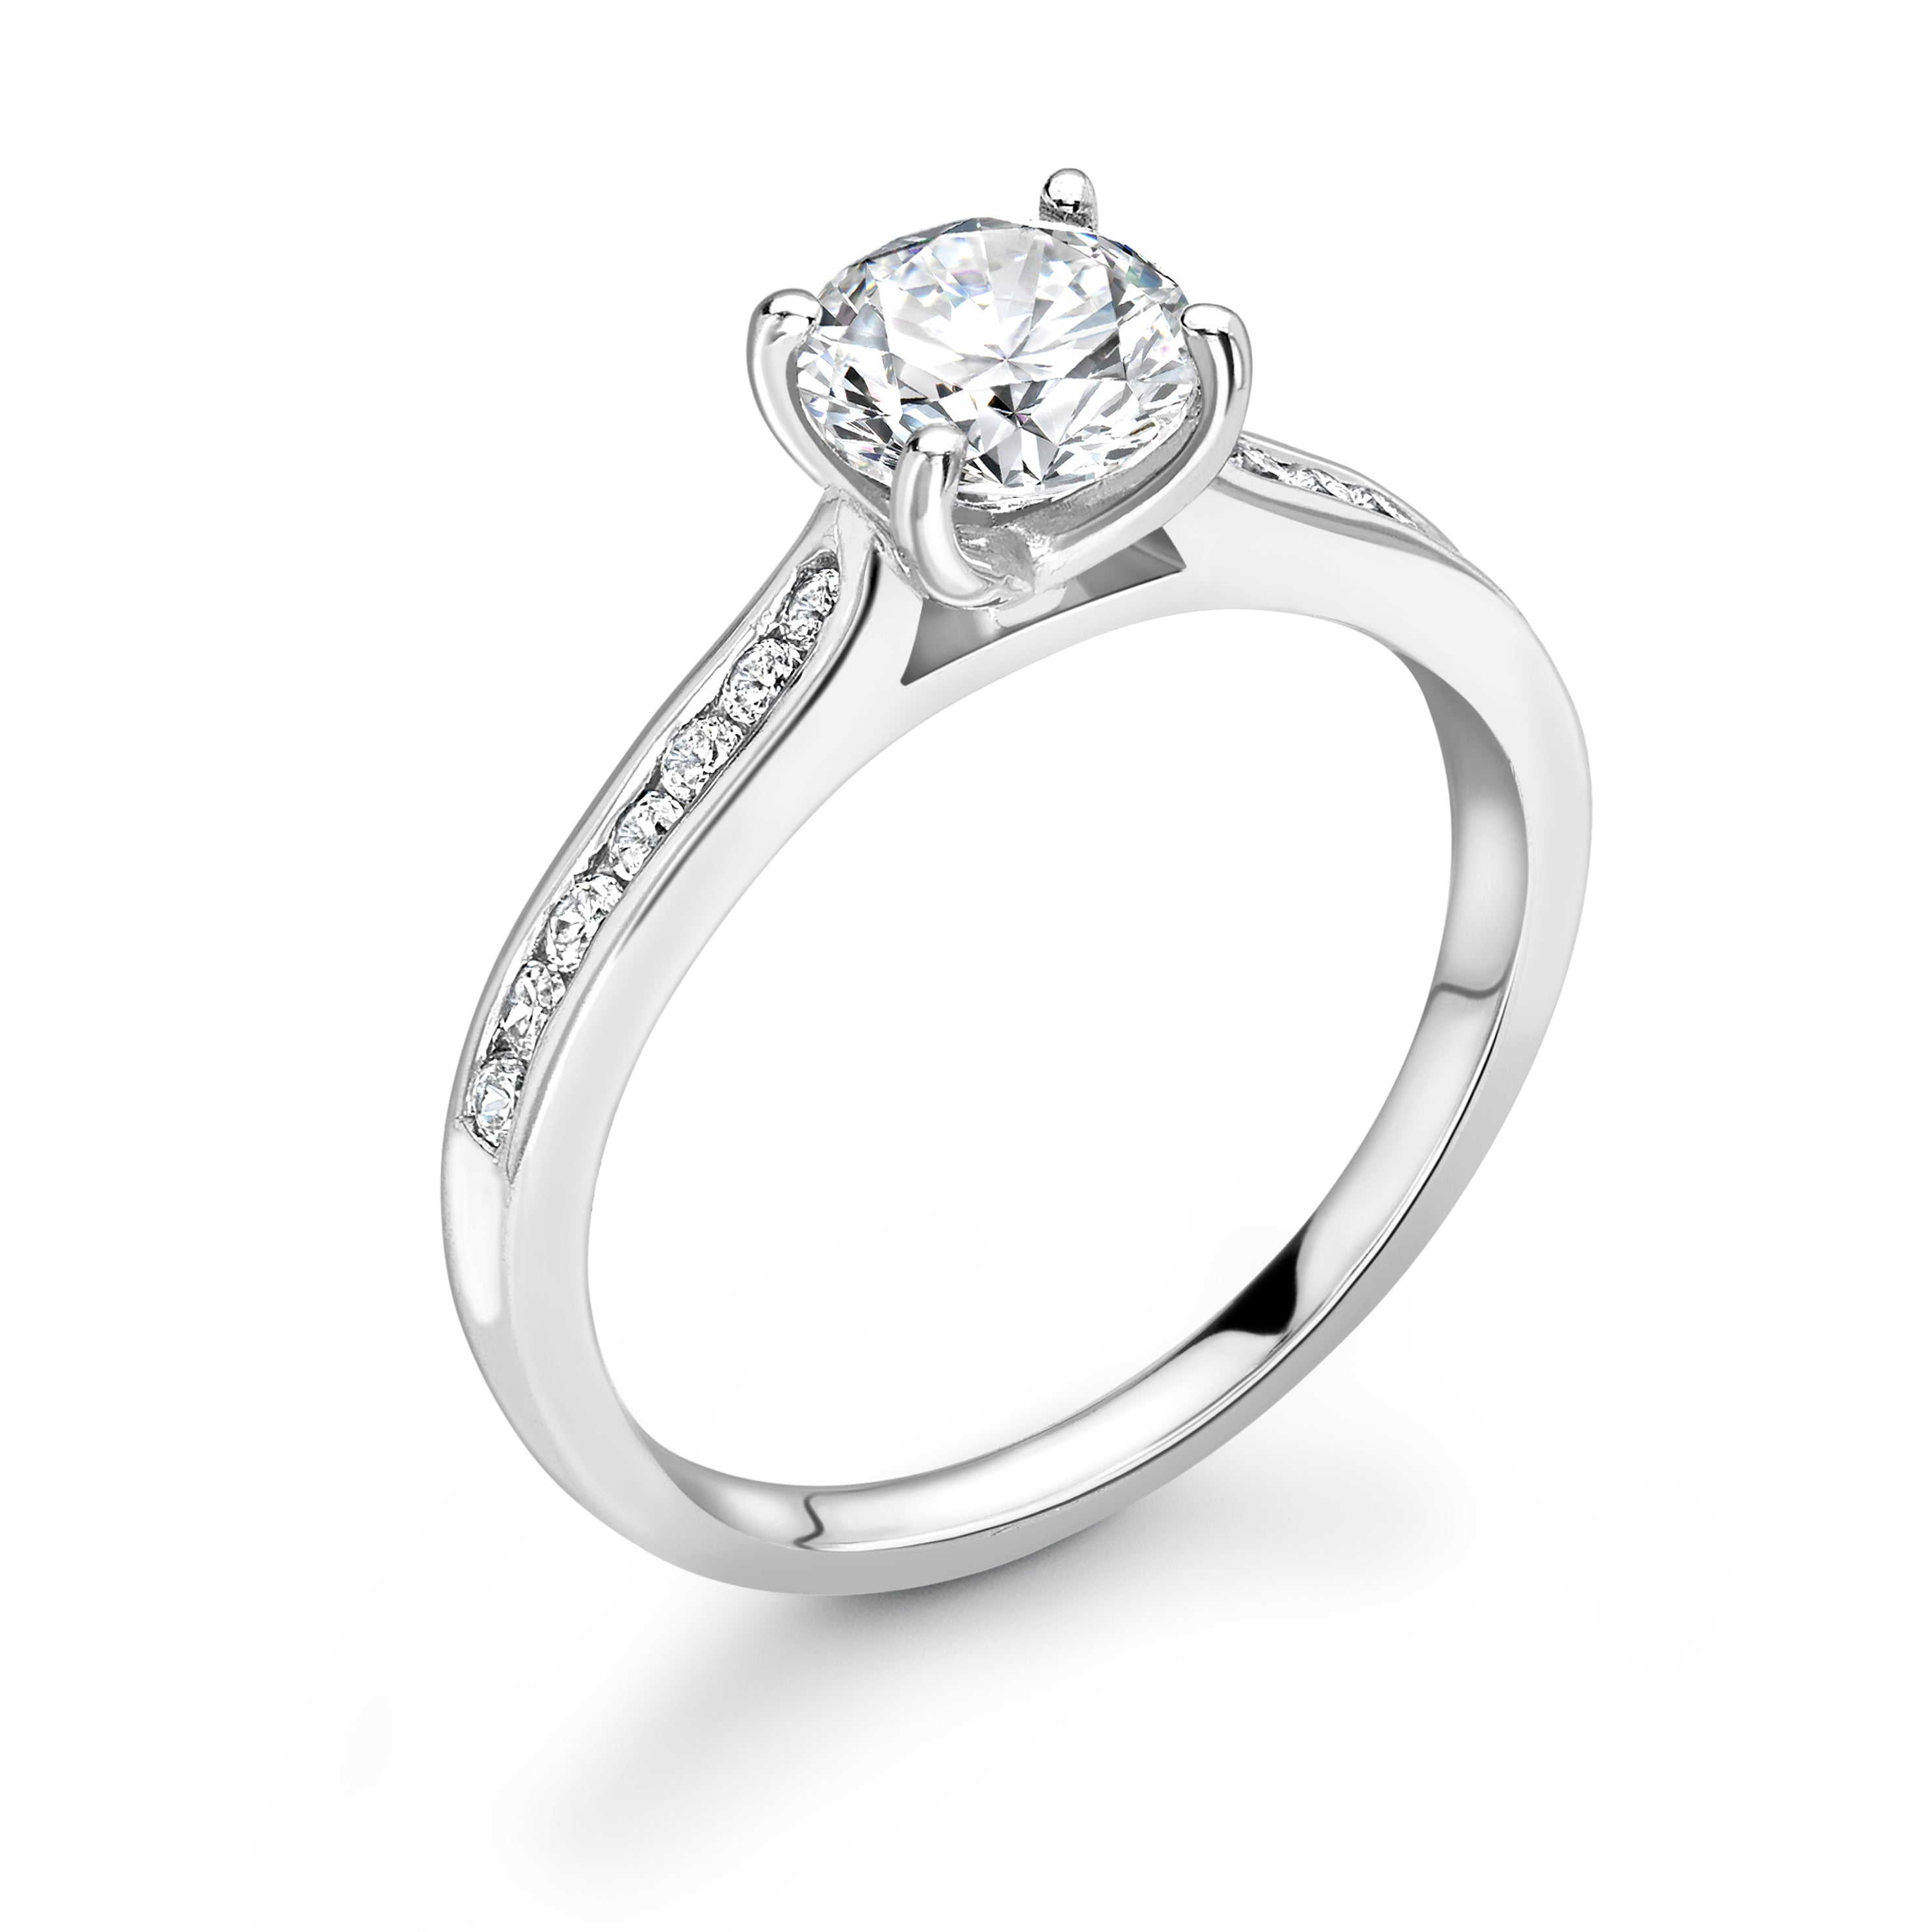 Sk Jewel,Inc 1/2ctw Diamond Engagement Ring in 10k Yellow Gold (H-I, I2-I3)  | Amazon.com